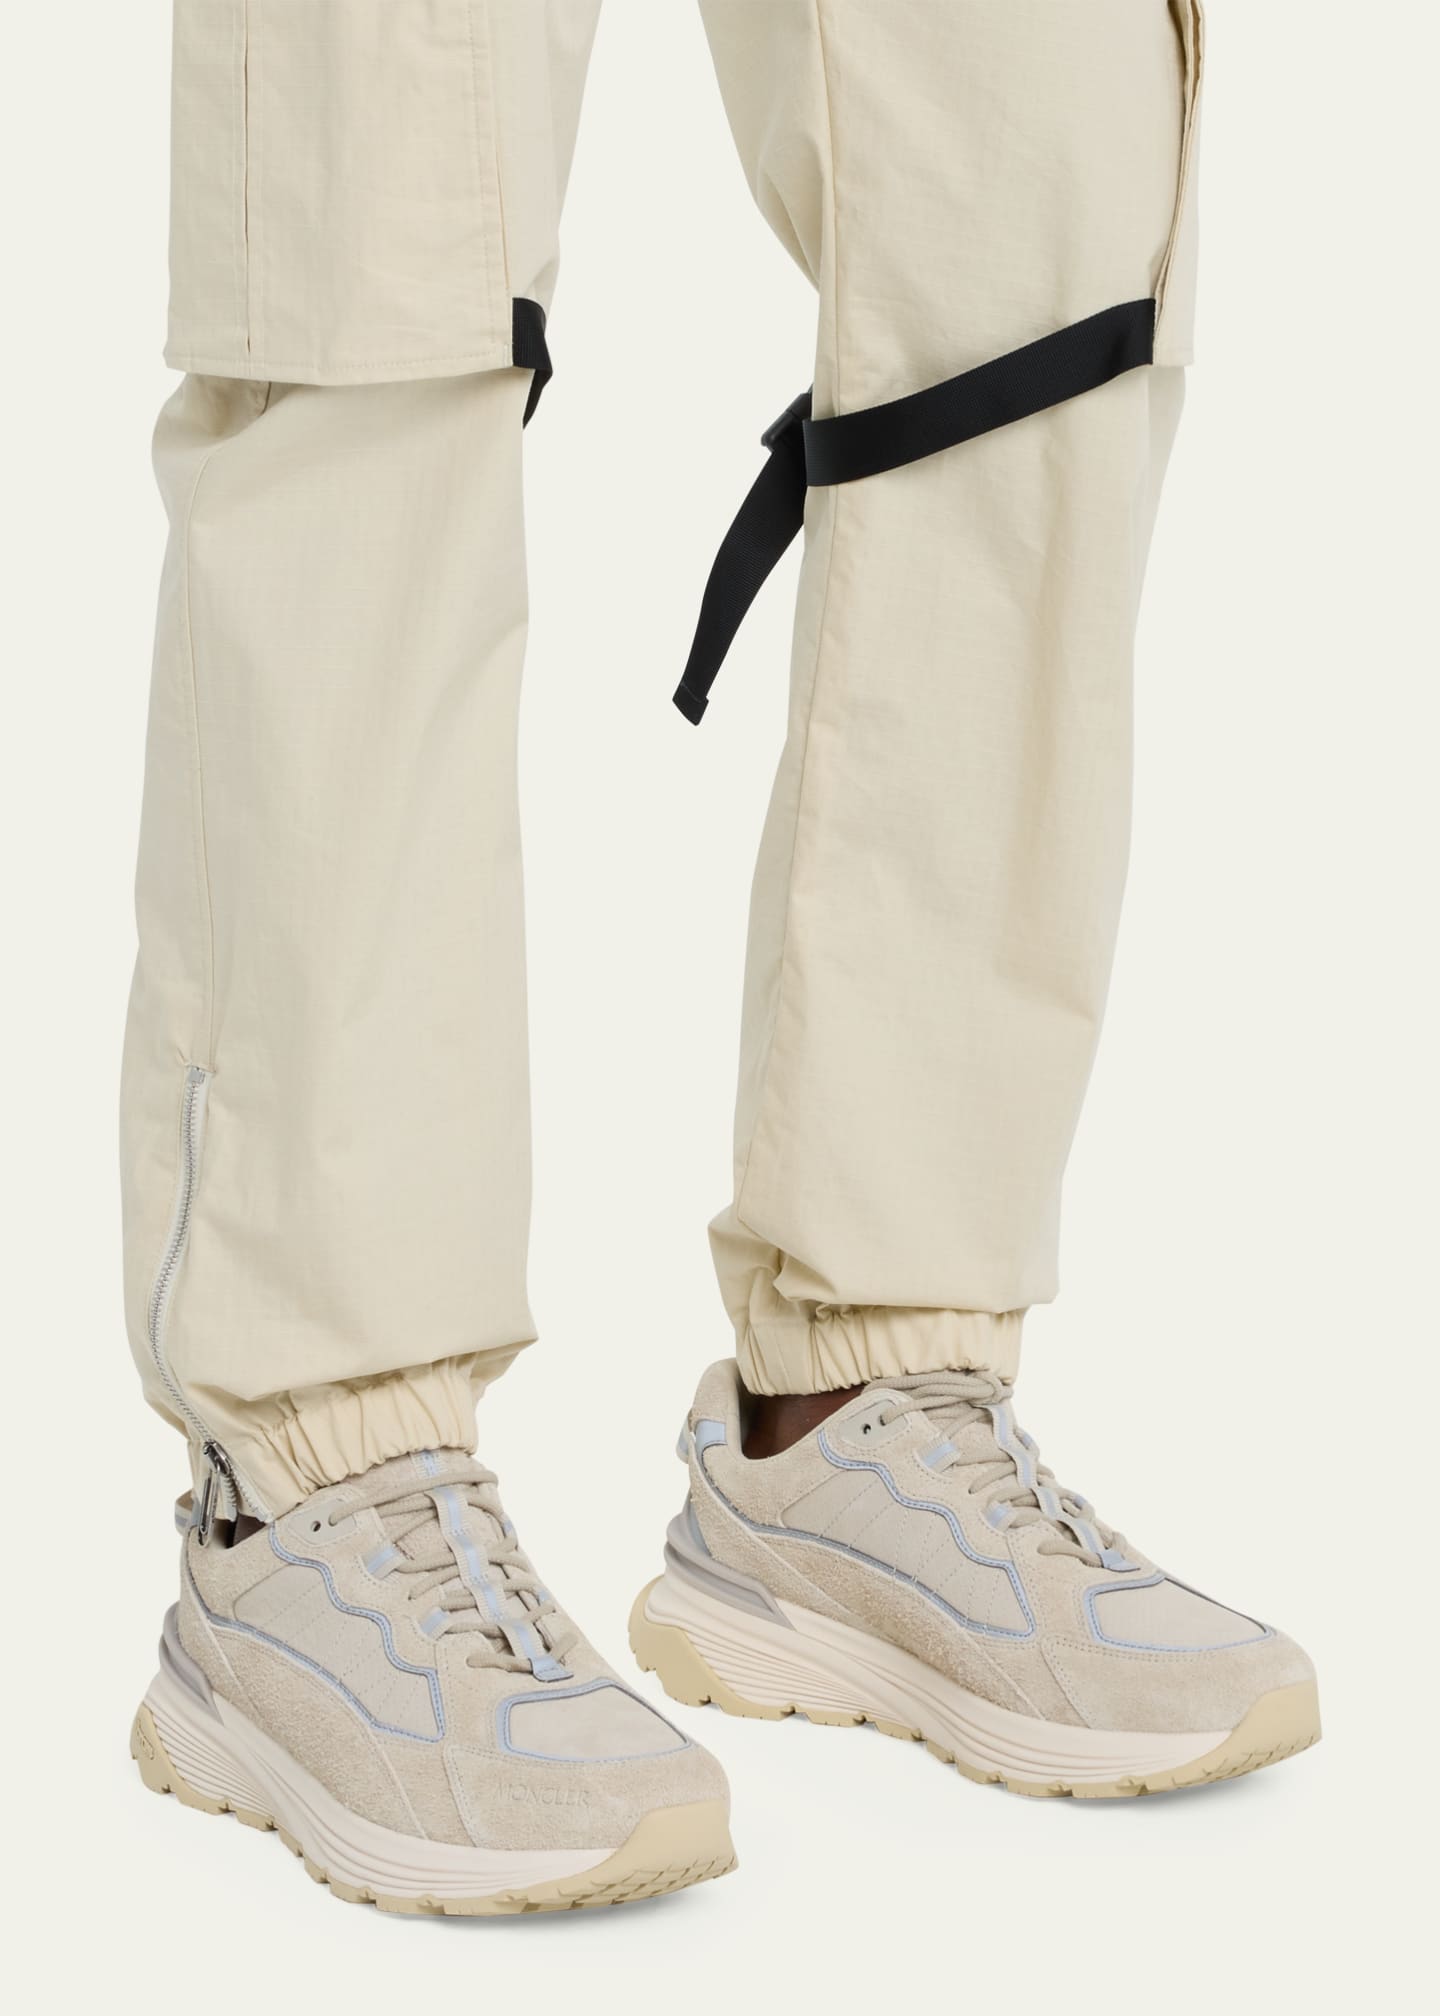 Moncler Men's Lite Runner Leather Low Top Sneakers - Bergdorf Goodman